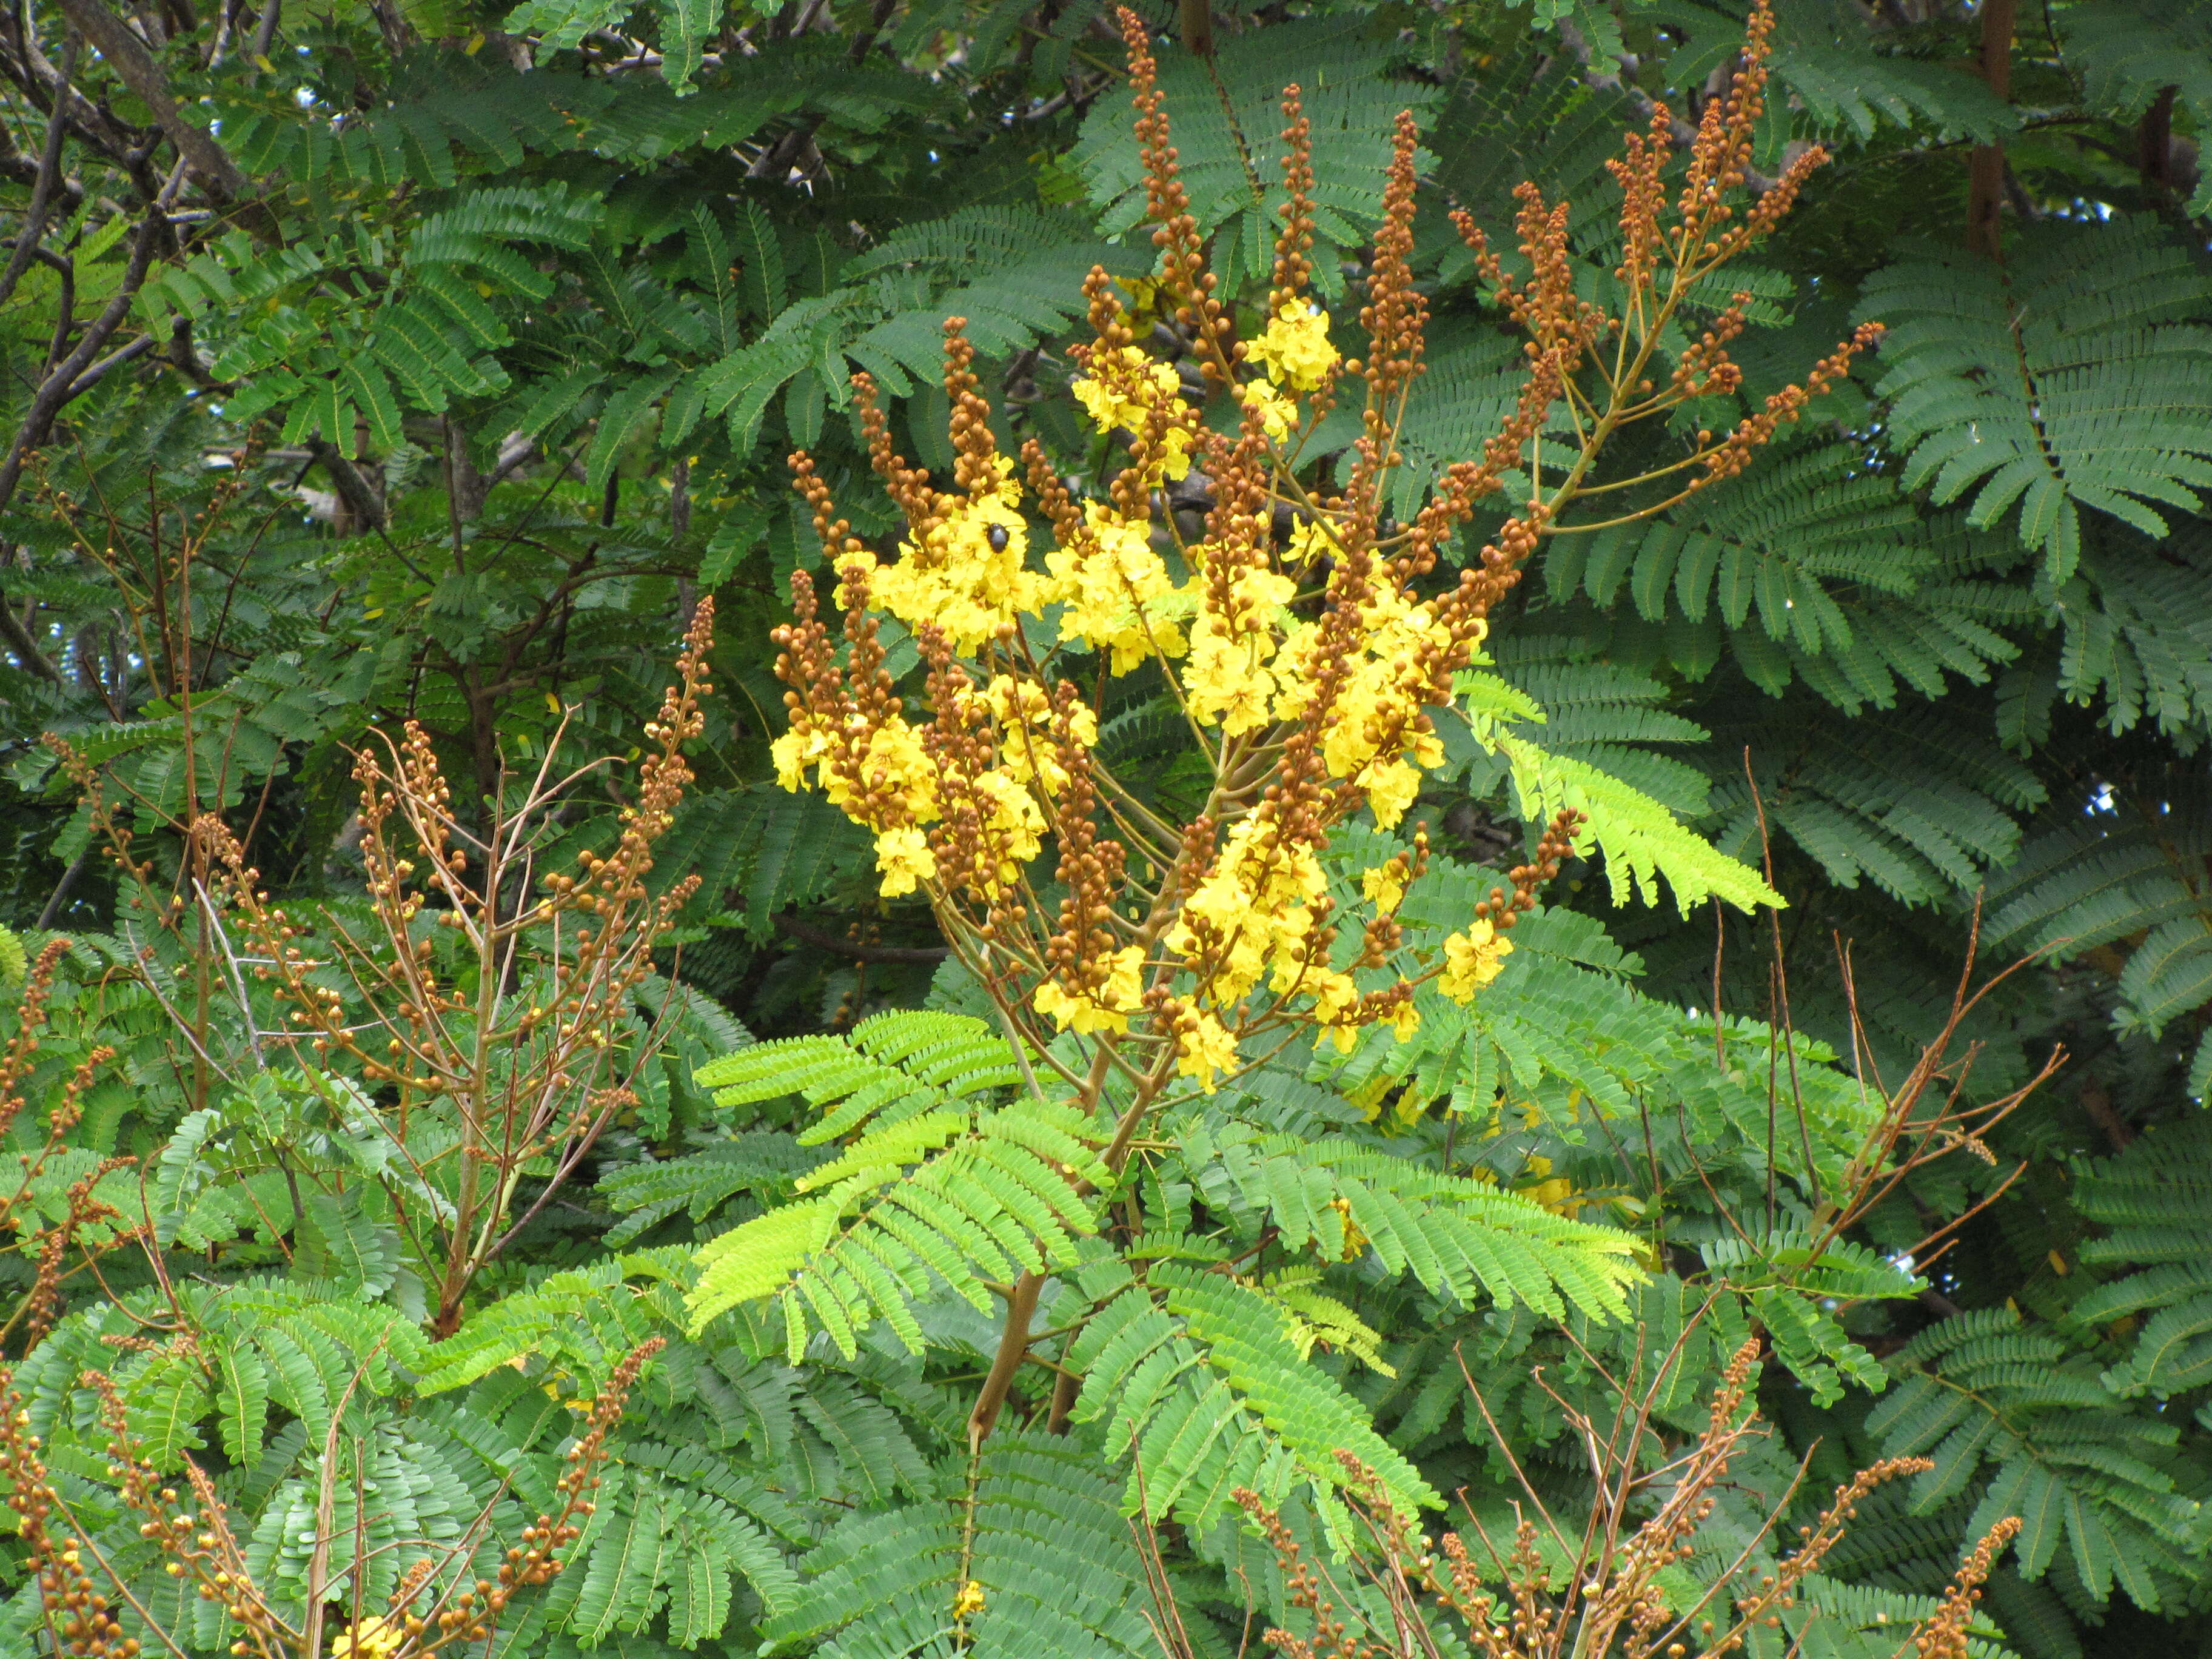 Image of Yellow Flame Tree